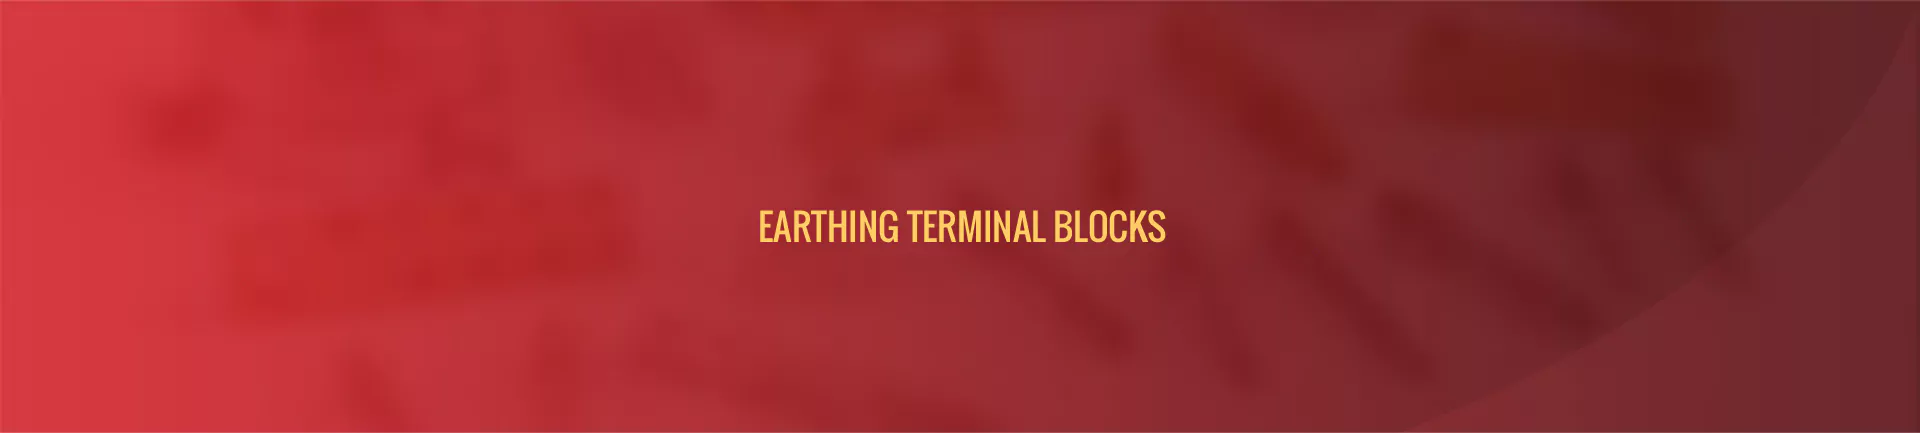 brass-terminal-blocks-banner